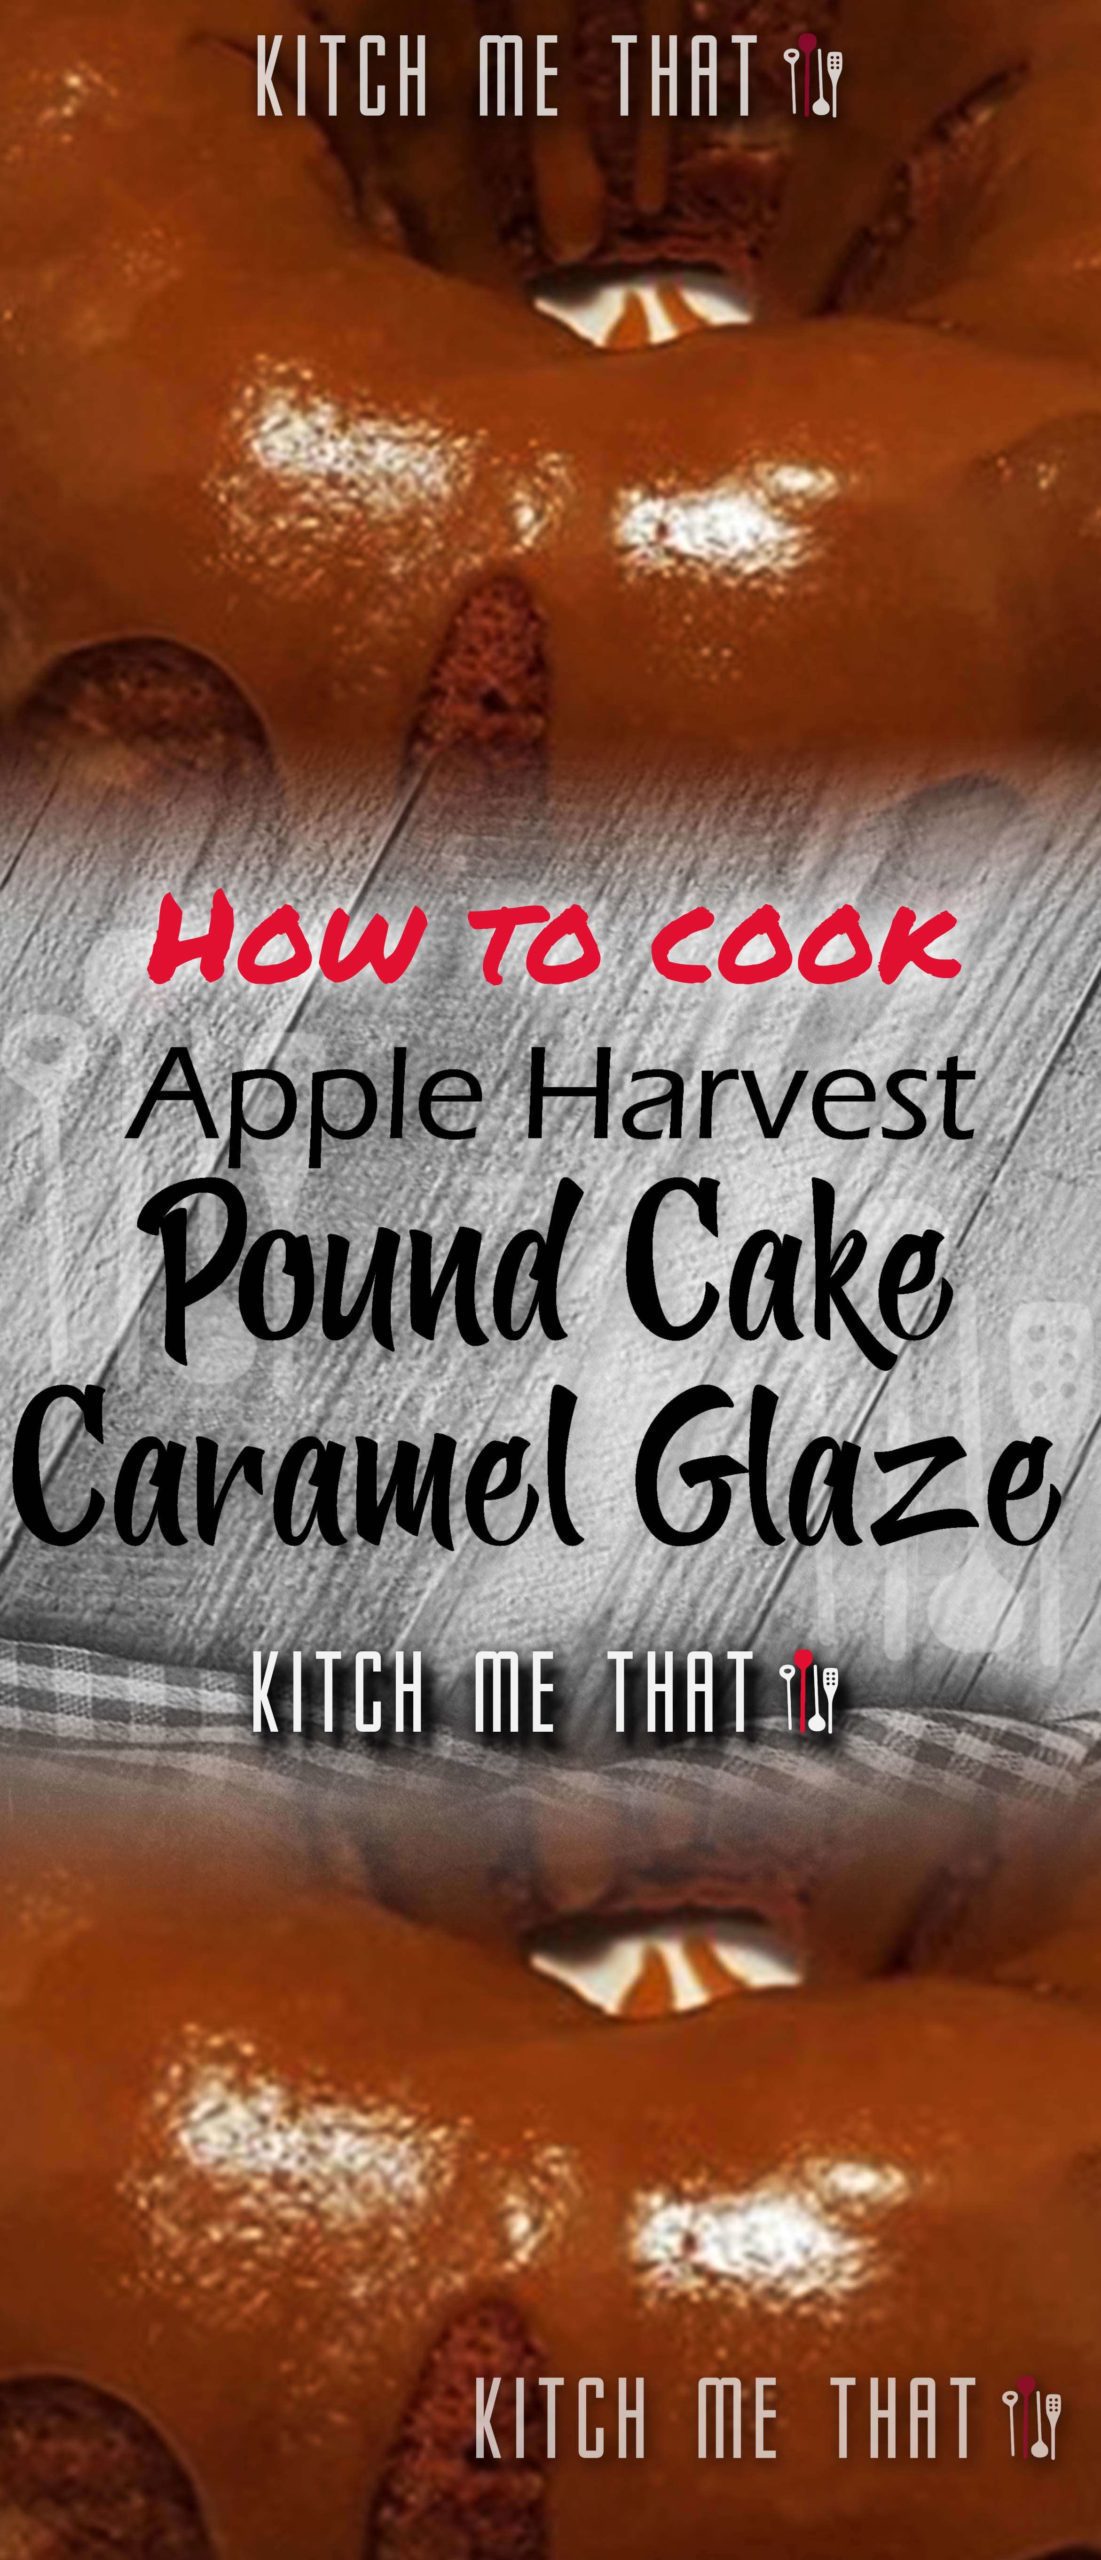 Apple Harvest Pound Cake With Caramel Glaze